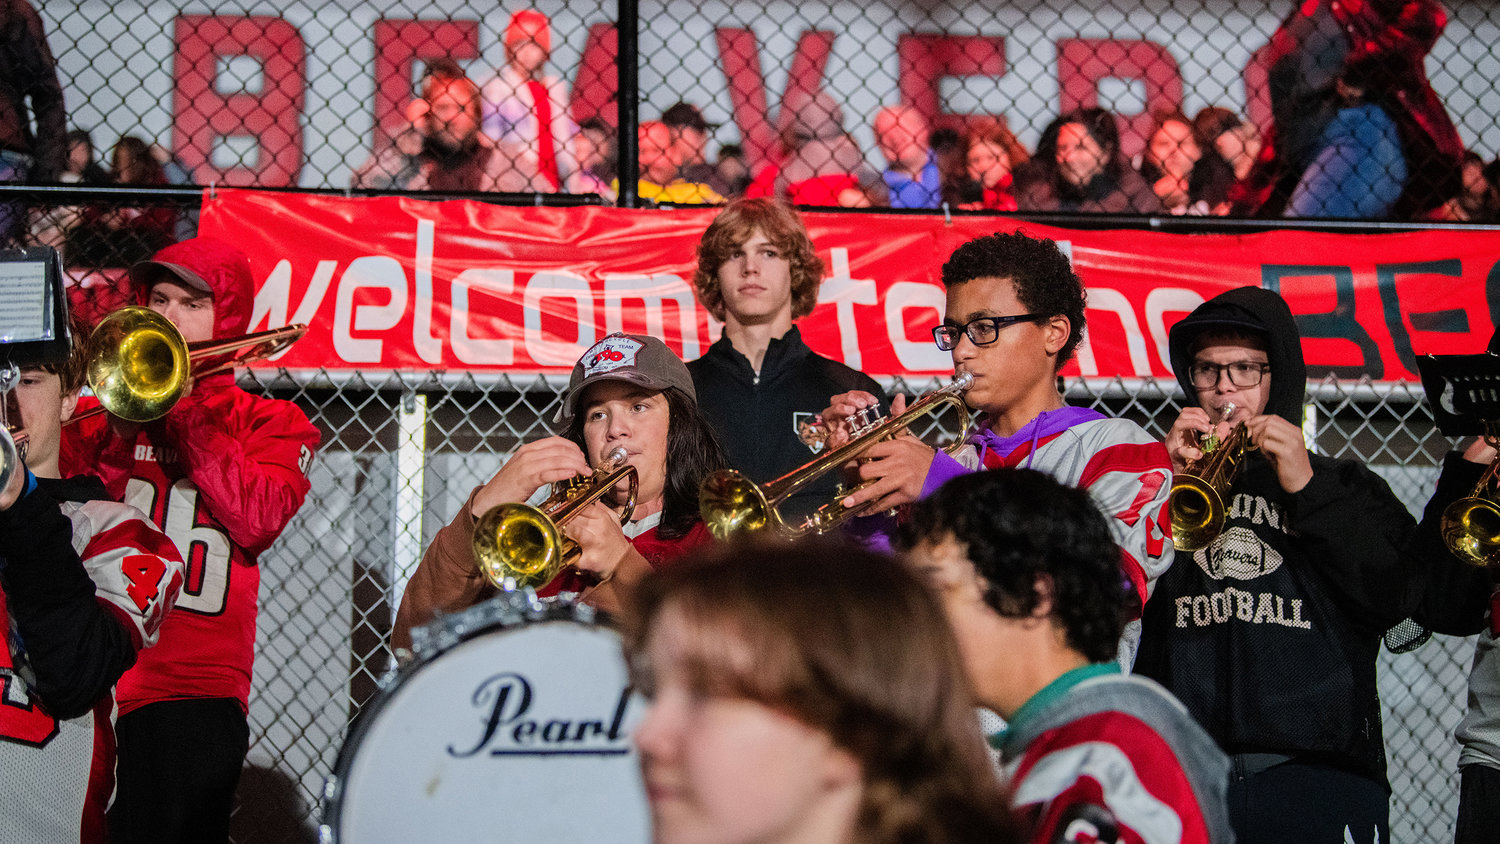 Members of the Tenino High School band play instruments Friday night at Beaver Stadium.